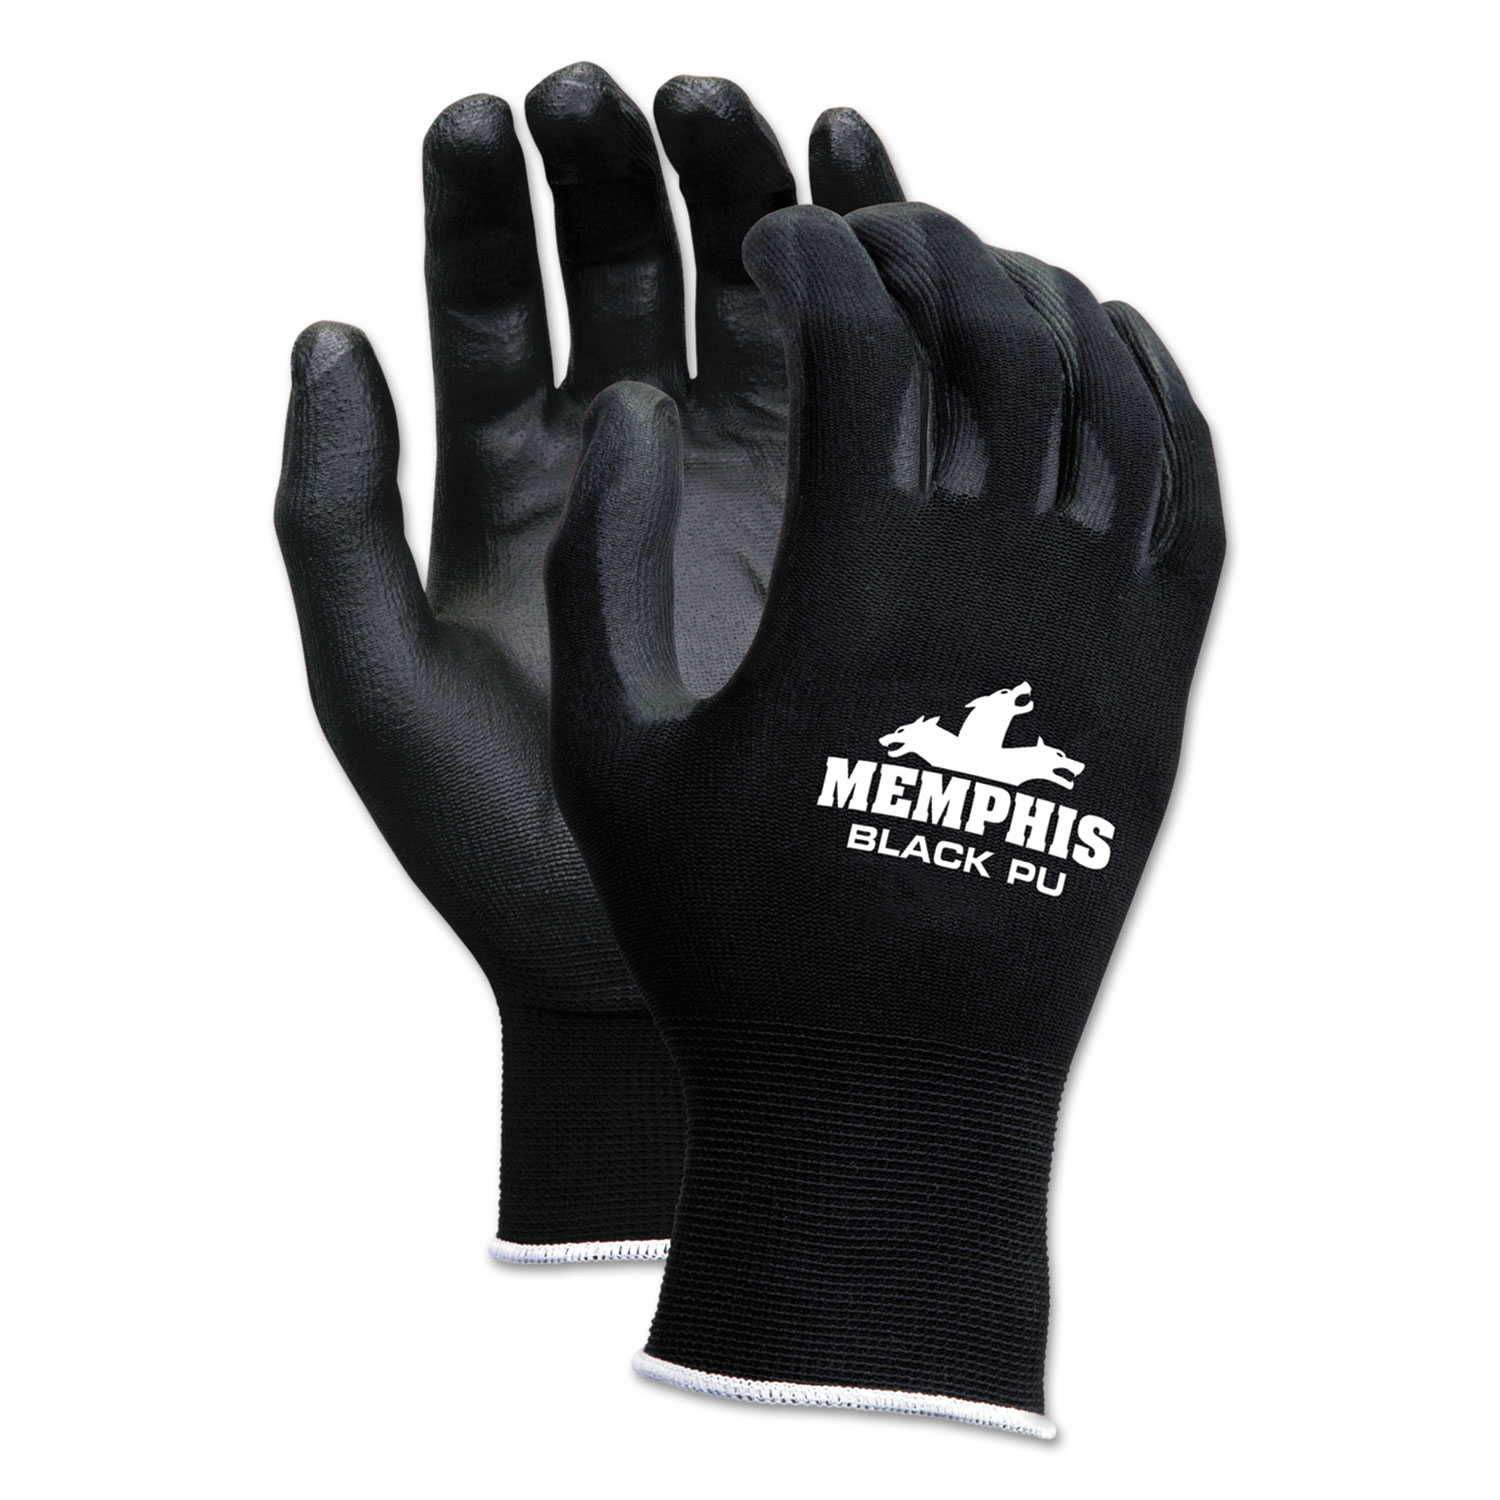  MCR Safety 9669S Economy PU Coated Work Gloves, Black, Small, 1 Dozen (CRW9669S) 